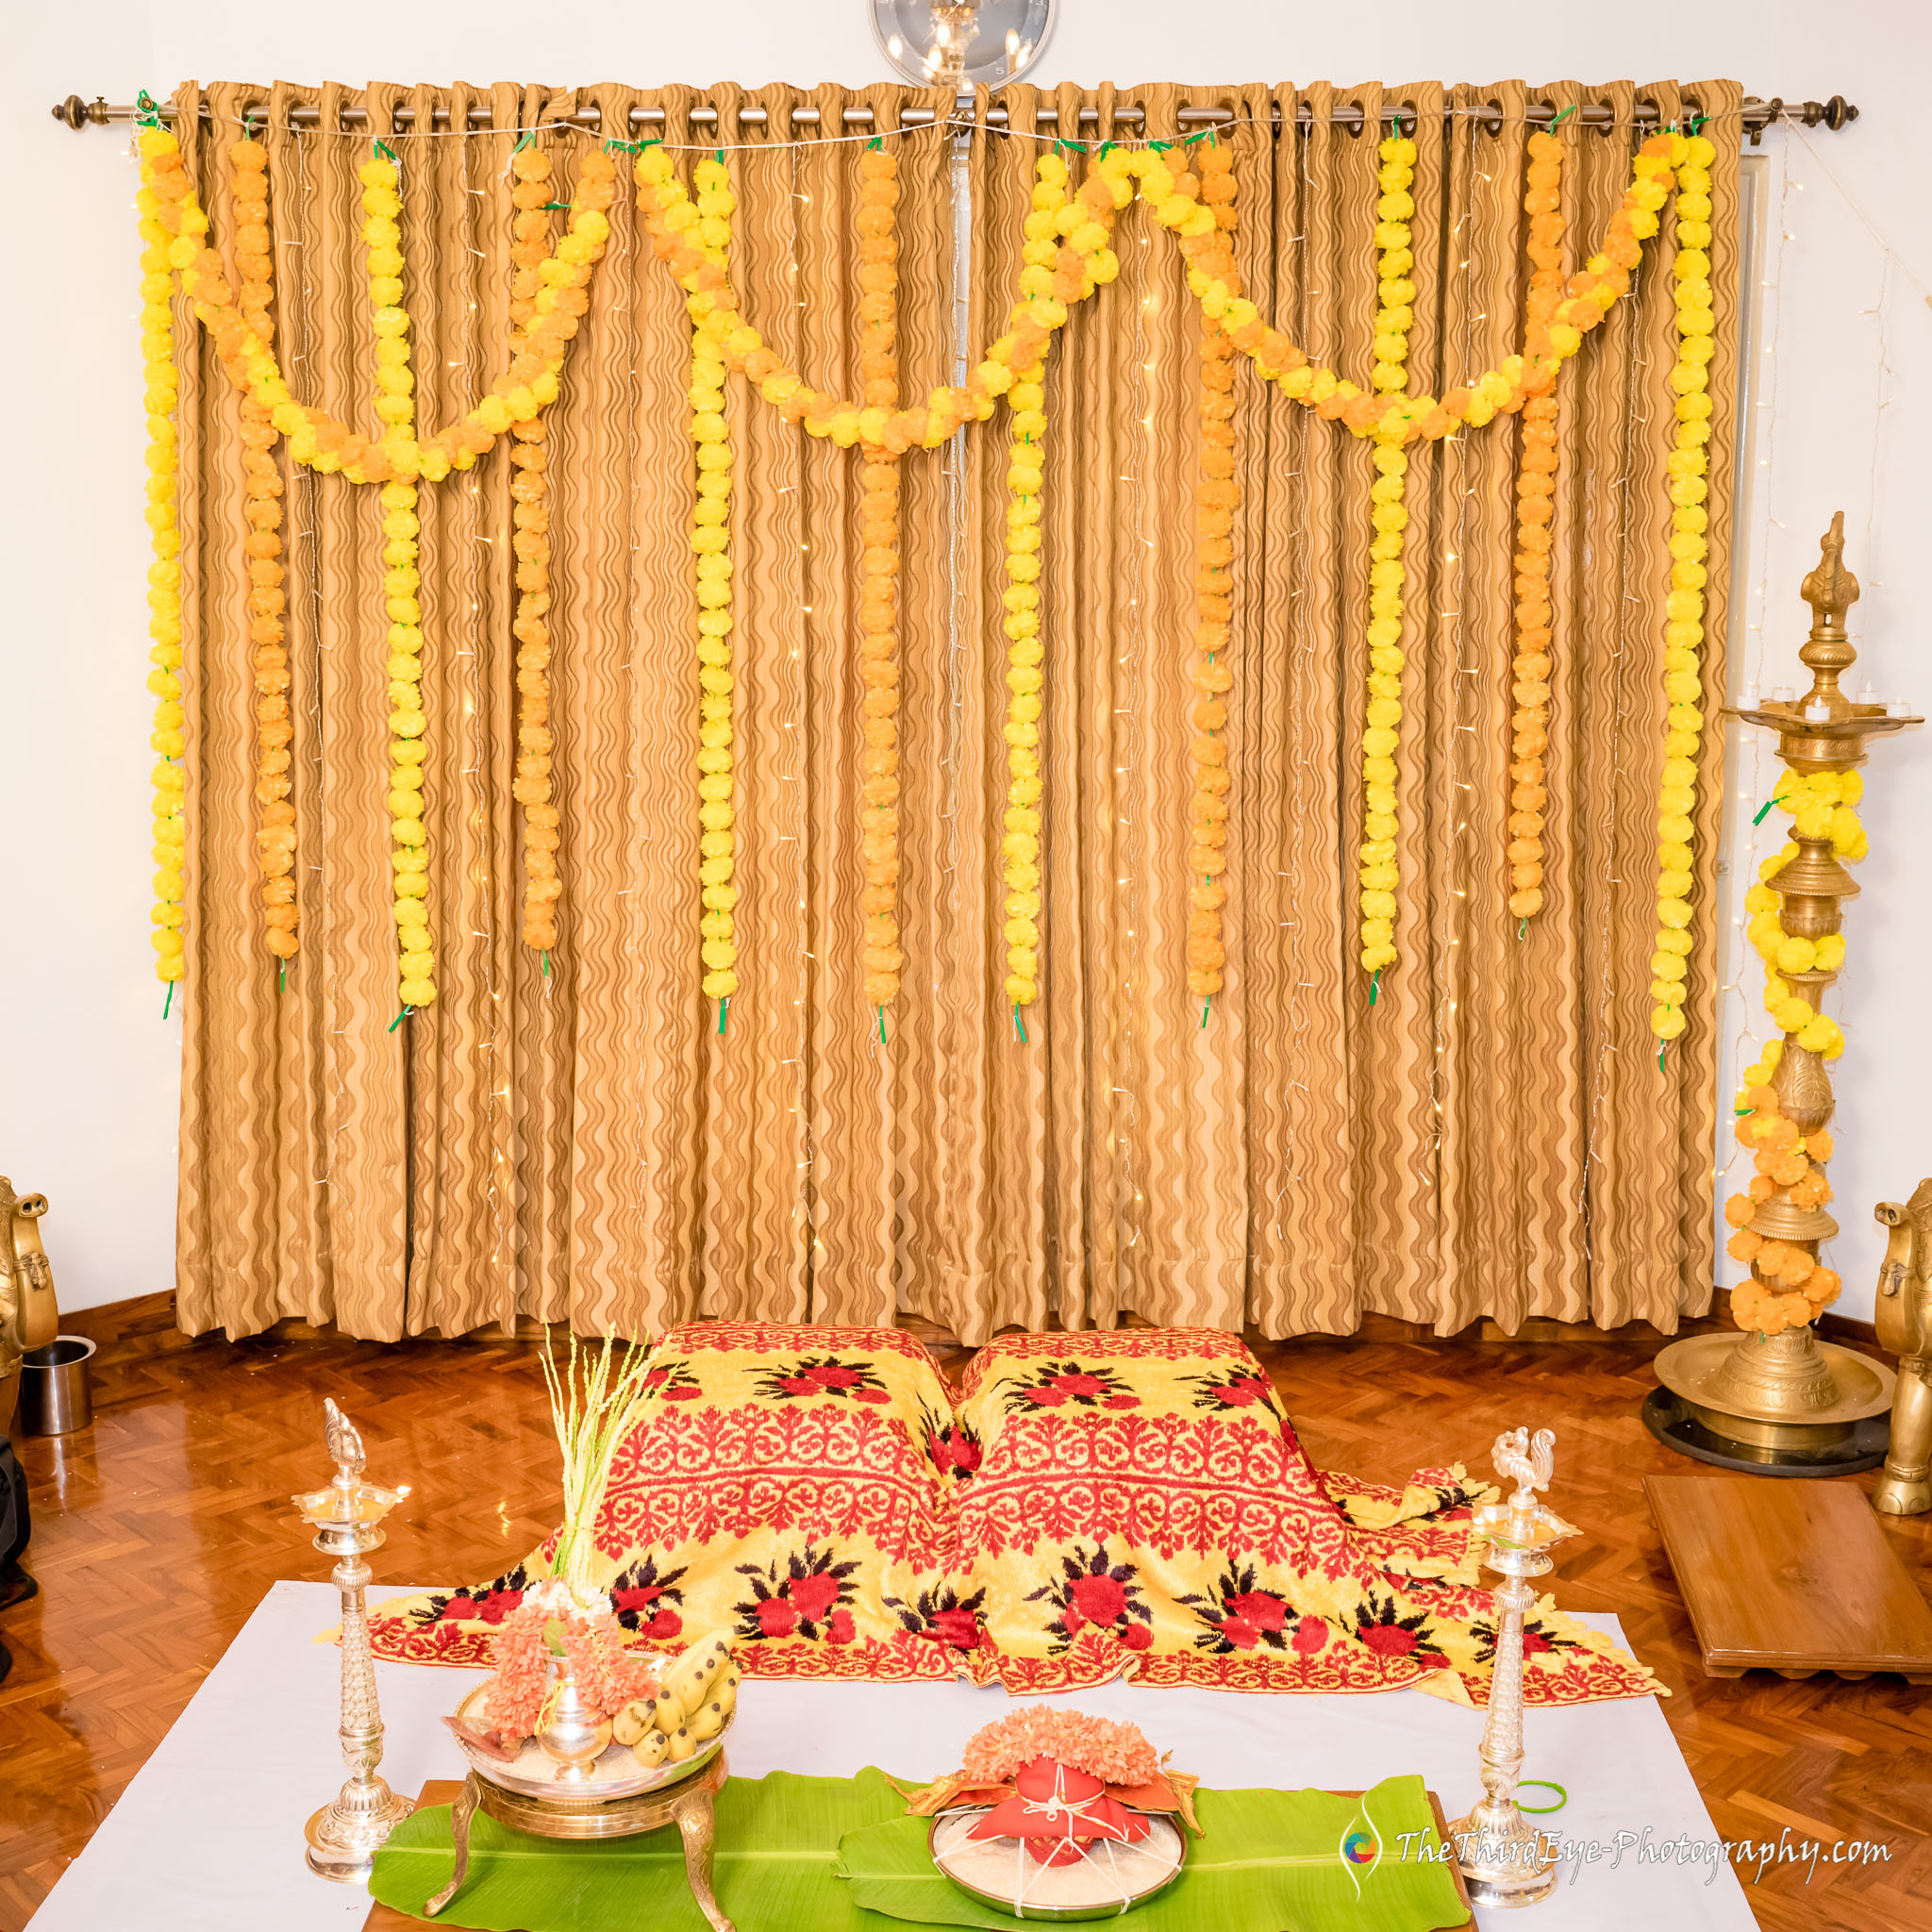 Details-Decor-South-indian-Candid-Wedding--Flowers-lamps-banana-leaf-Photography-Kannadiga-Quarantine_bengaluru_TTEP_CM_01_A7008785